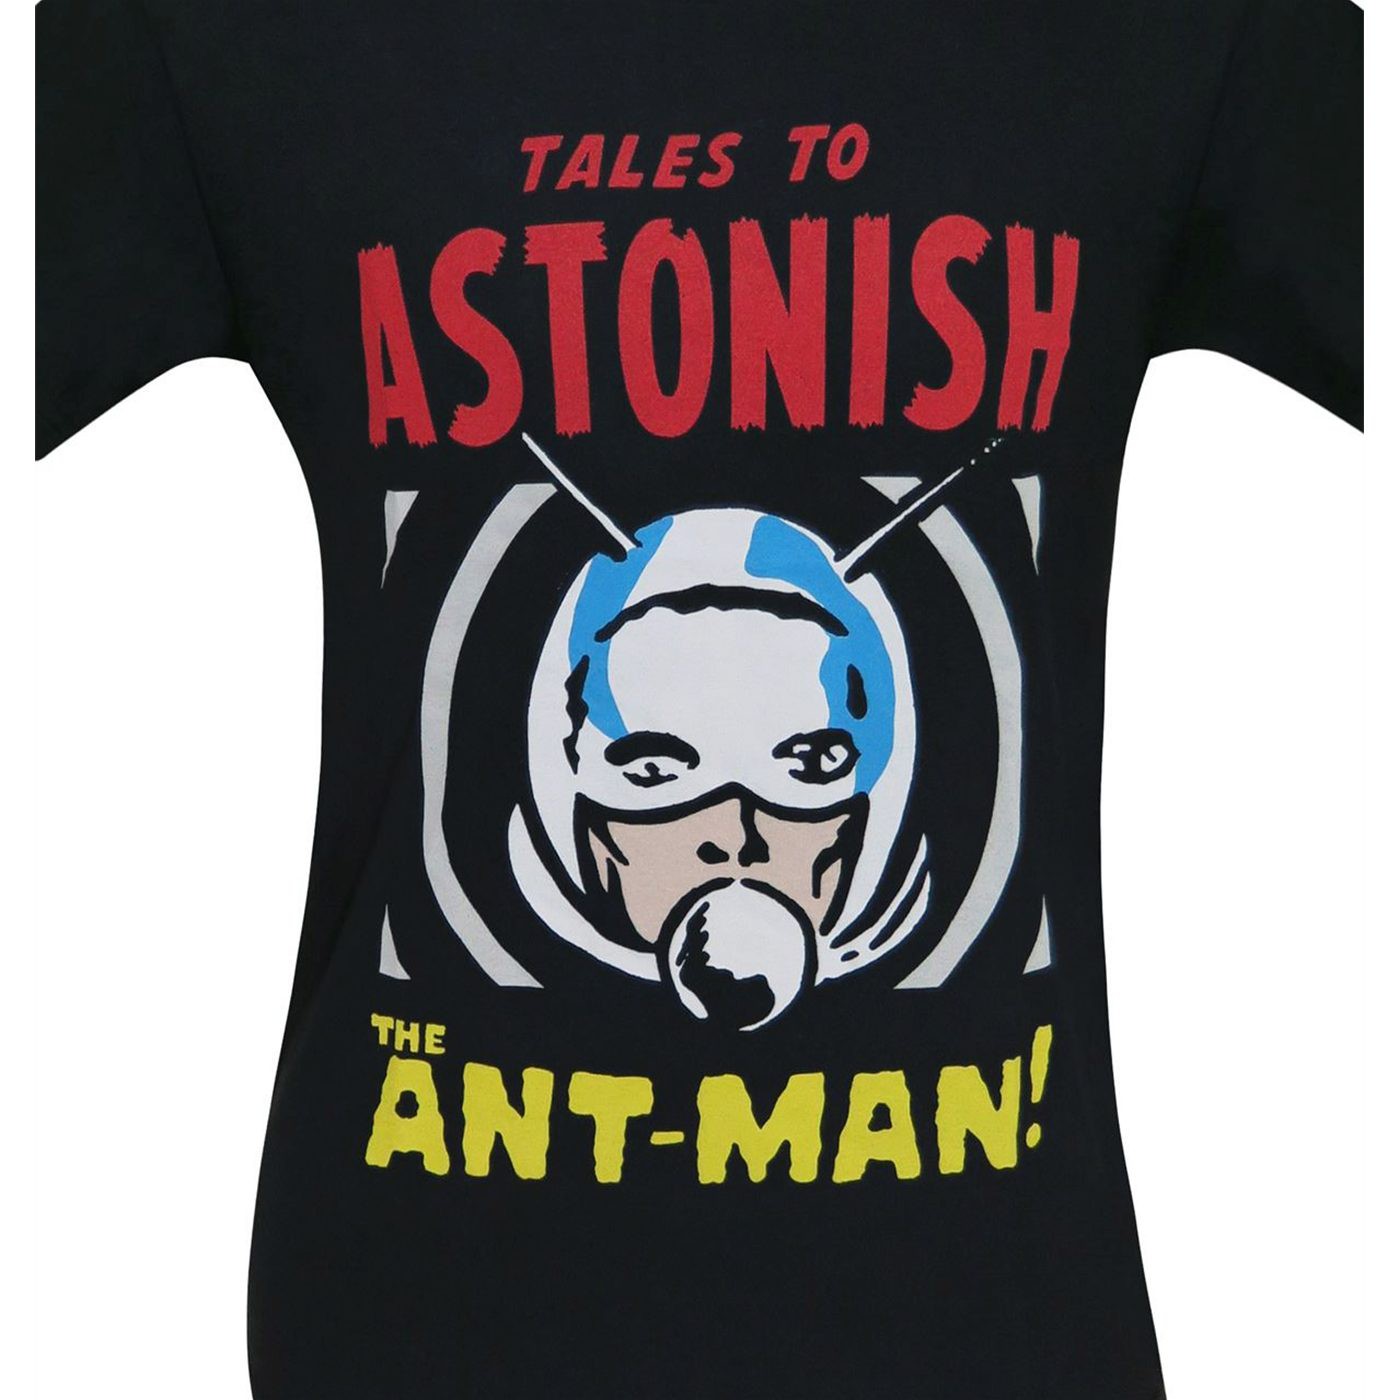 Tales to Astonish Ant-Man Men's T-Shirt